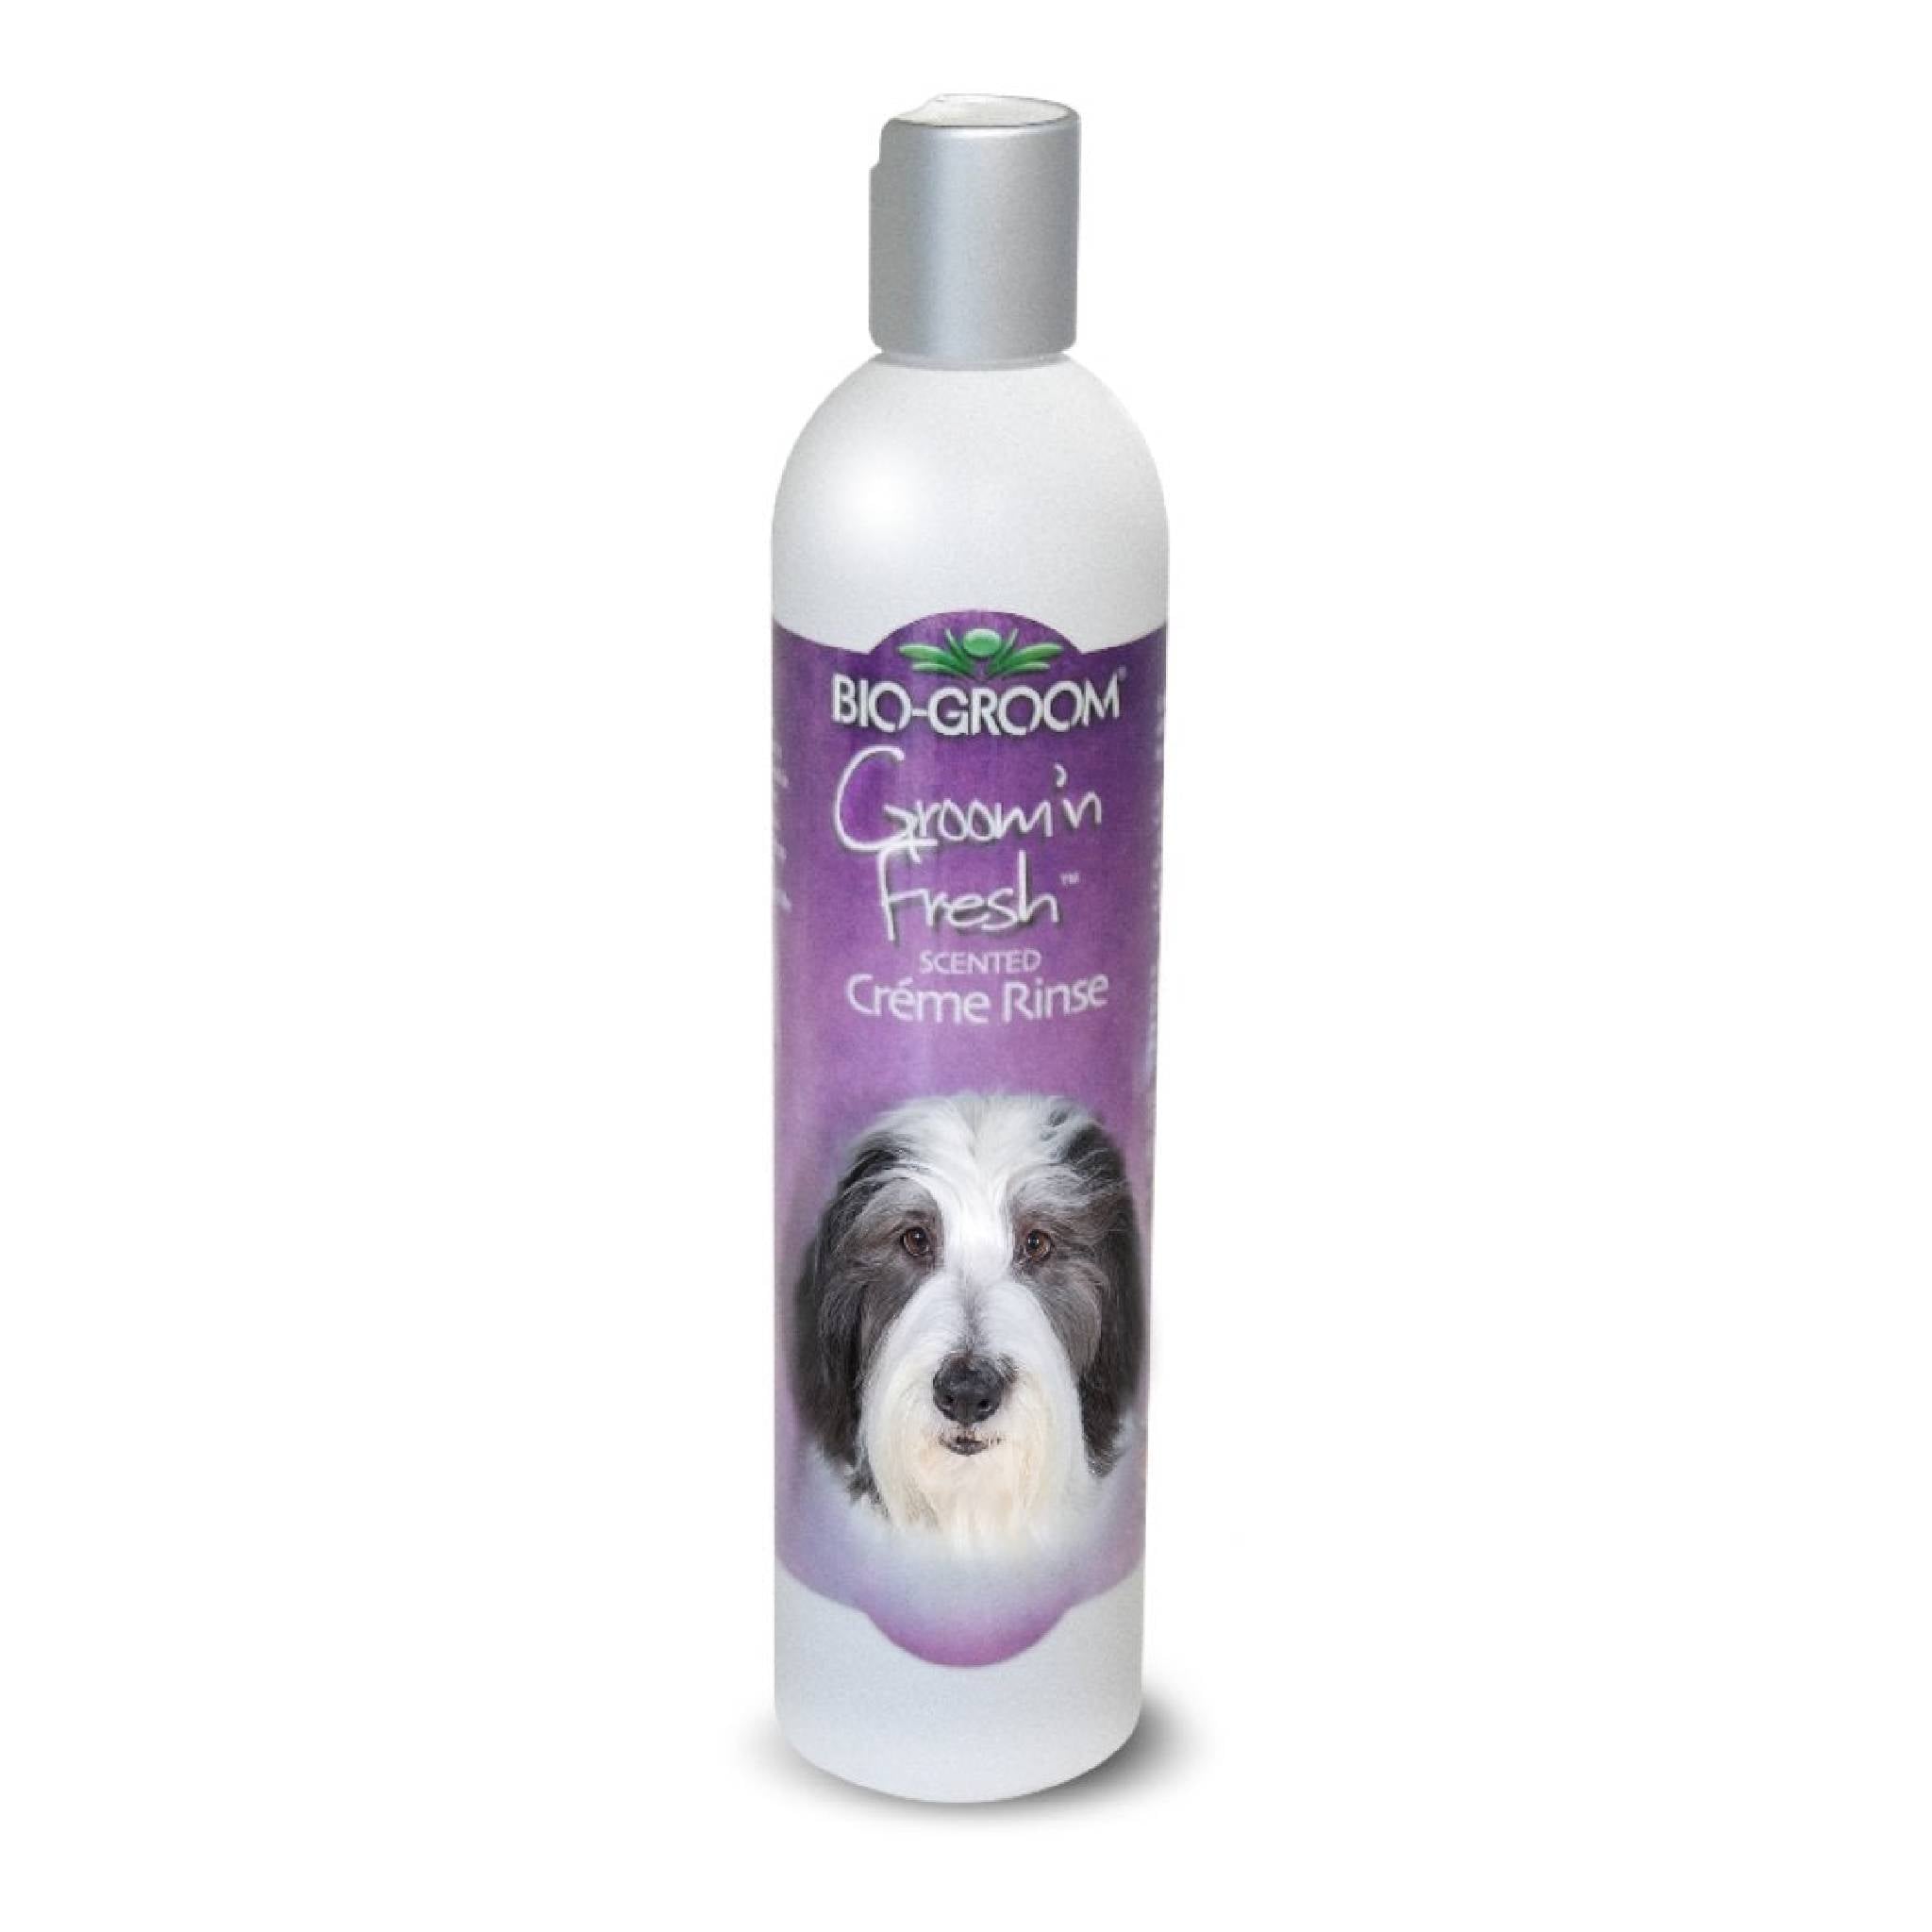 Bio-Groom Groom 'N Fresh Scented Creme Rinse Dog Conditioner, 355 ML